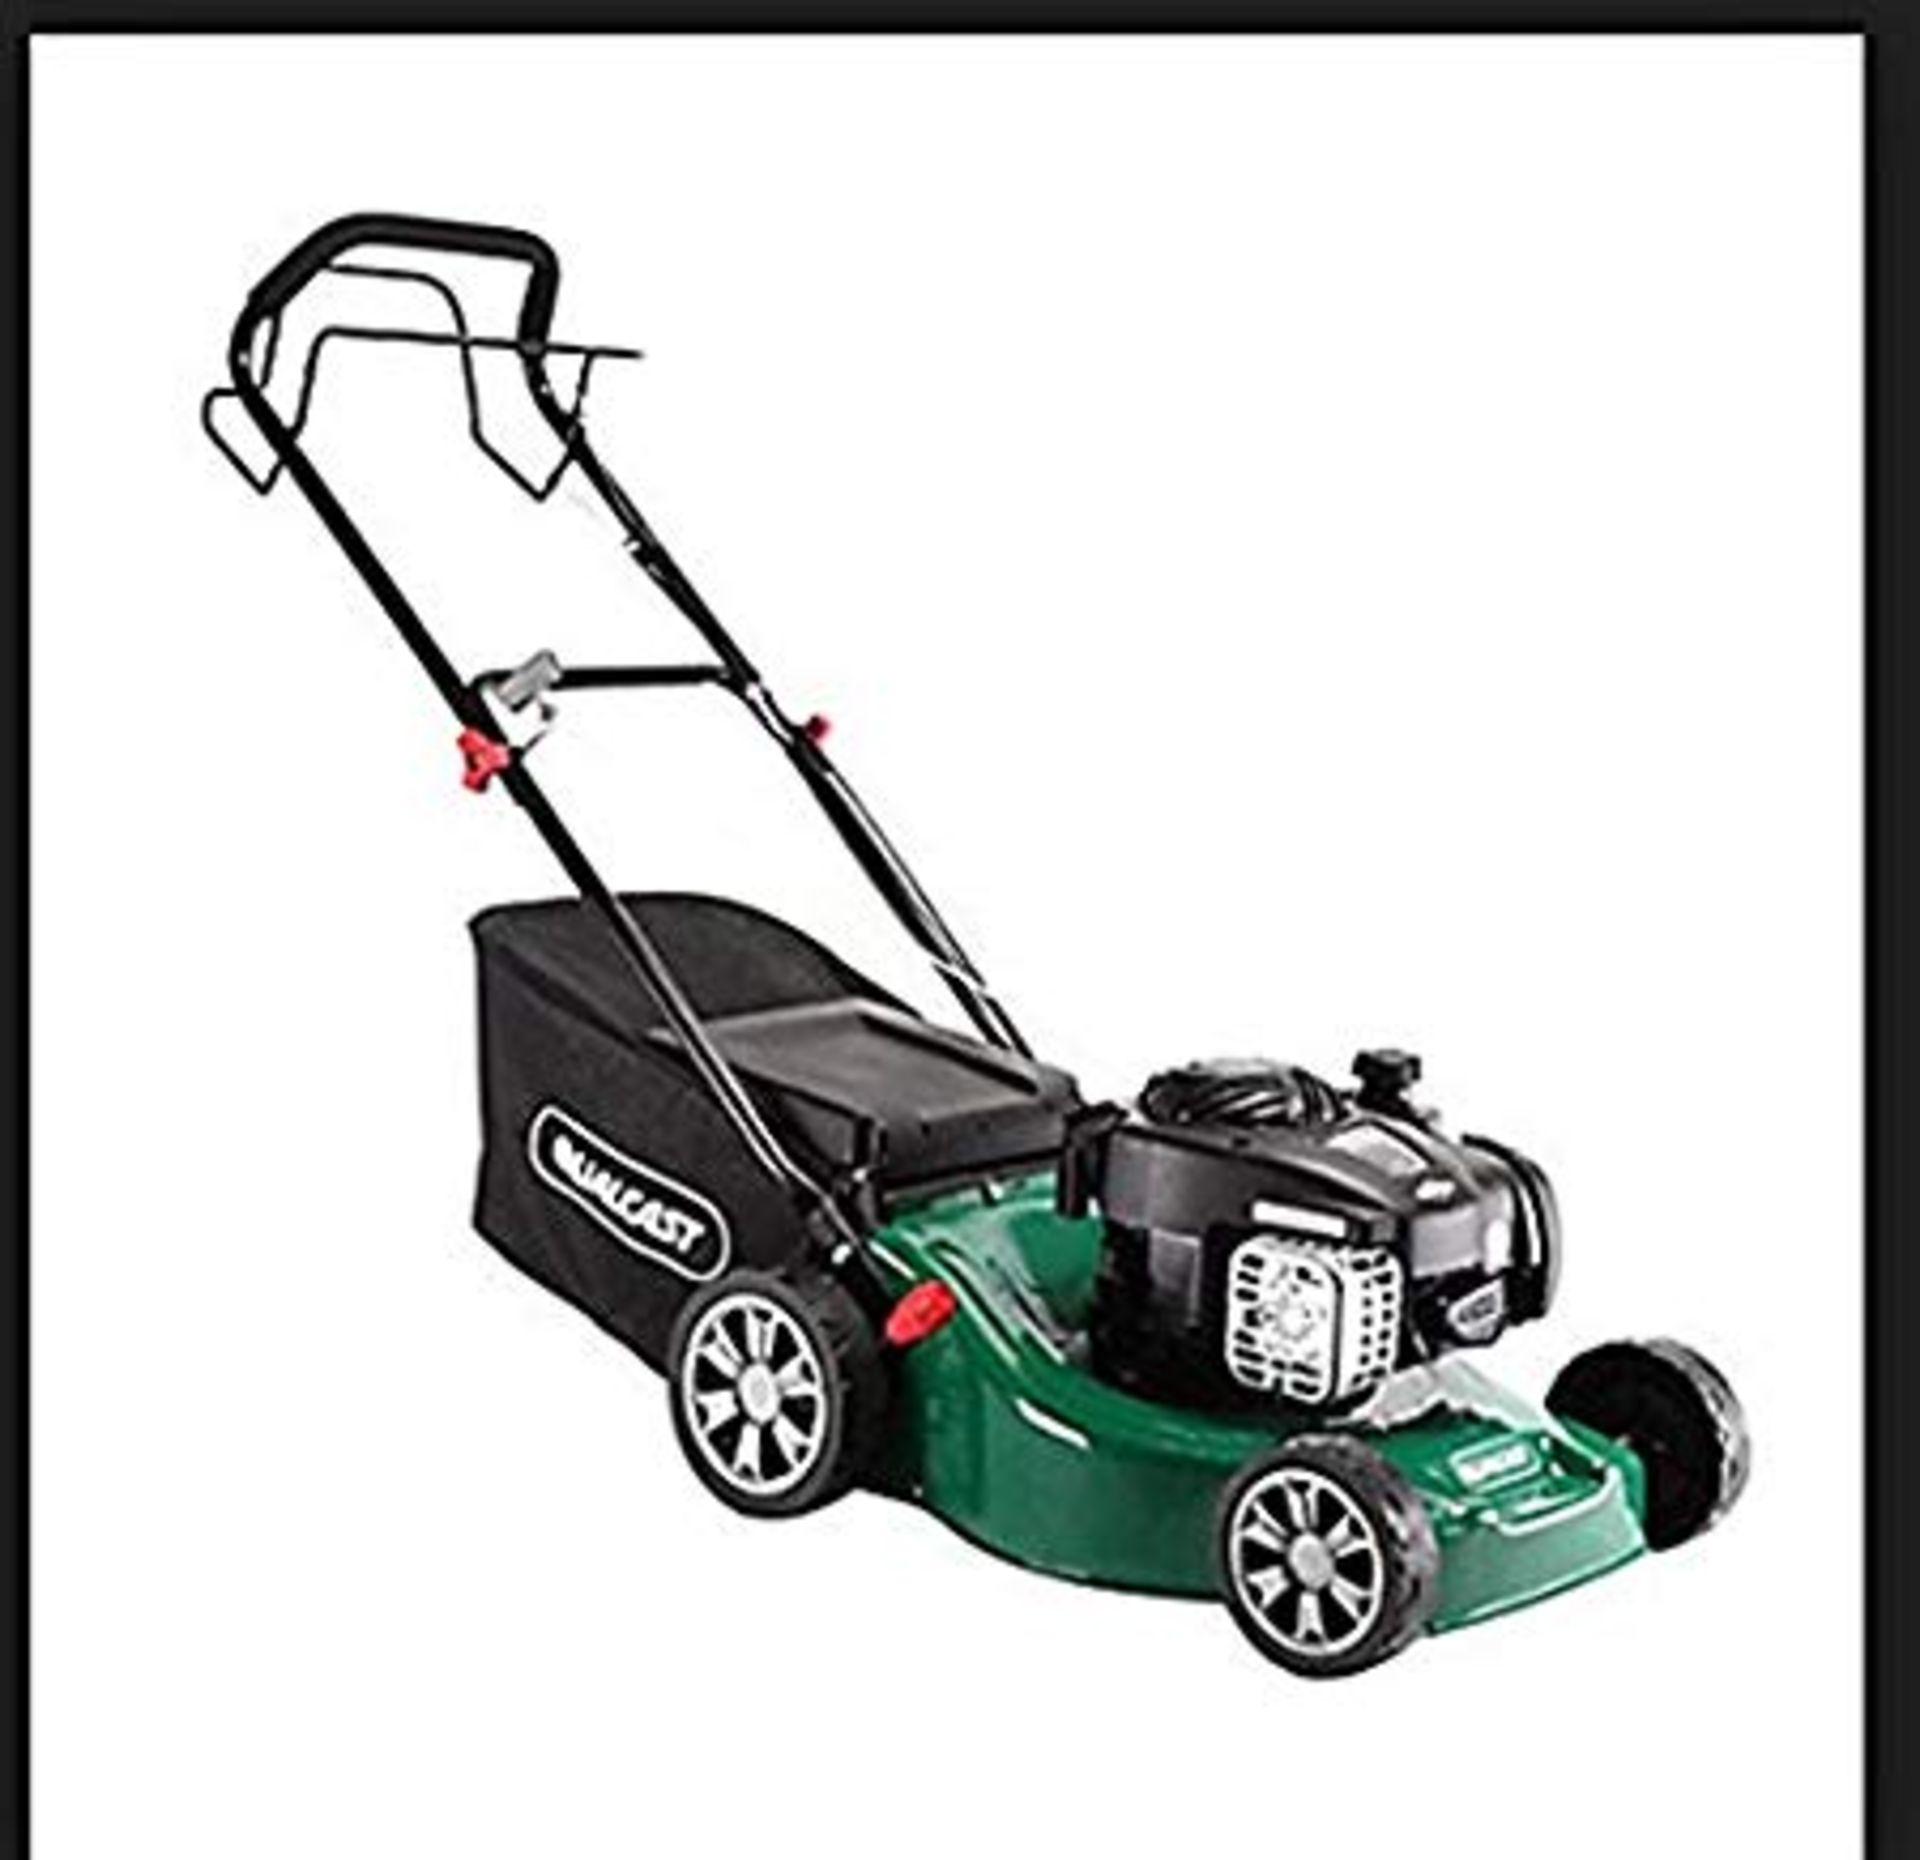 V Brand New Qualcast QP41 41cm 125cc Petrol Rotary Lawn Mower - 45L Collect Volume - Adjustable